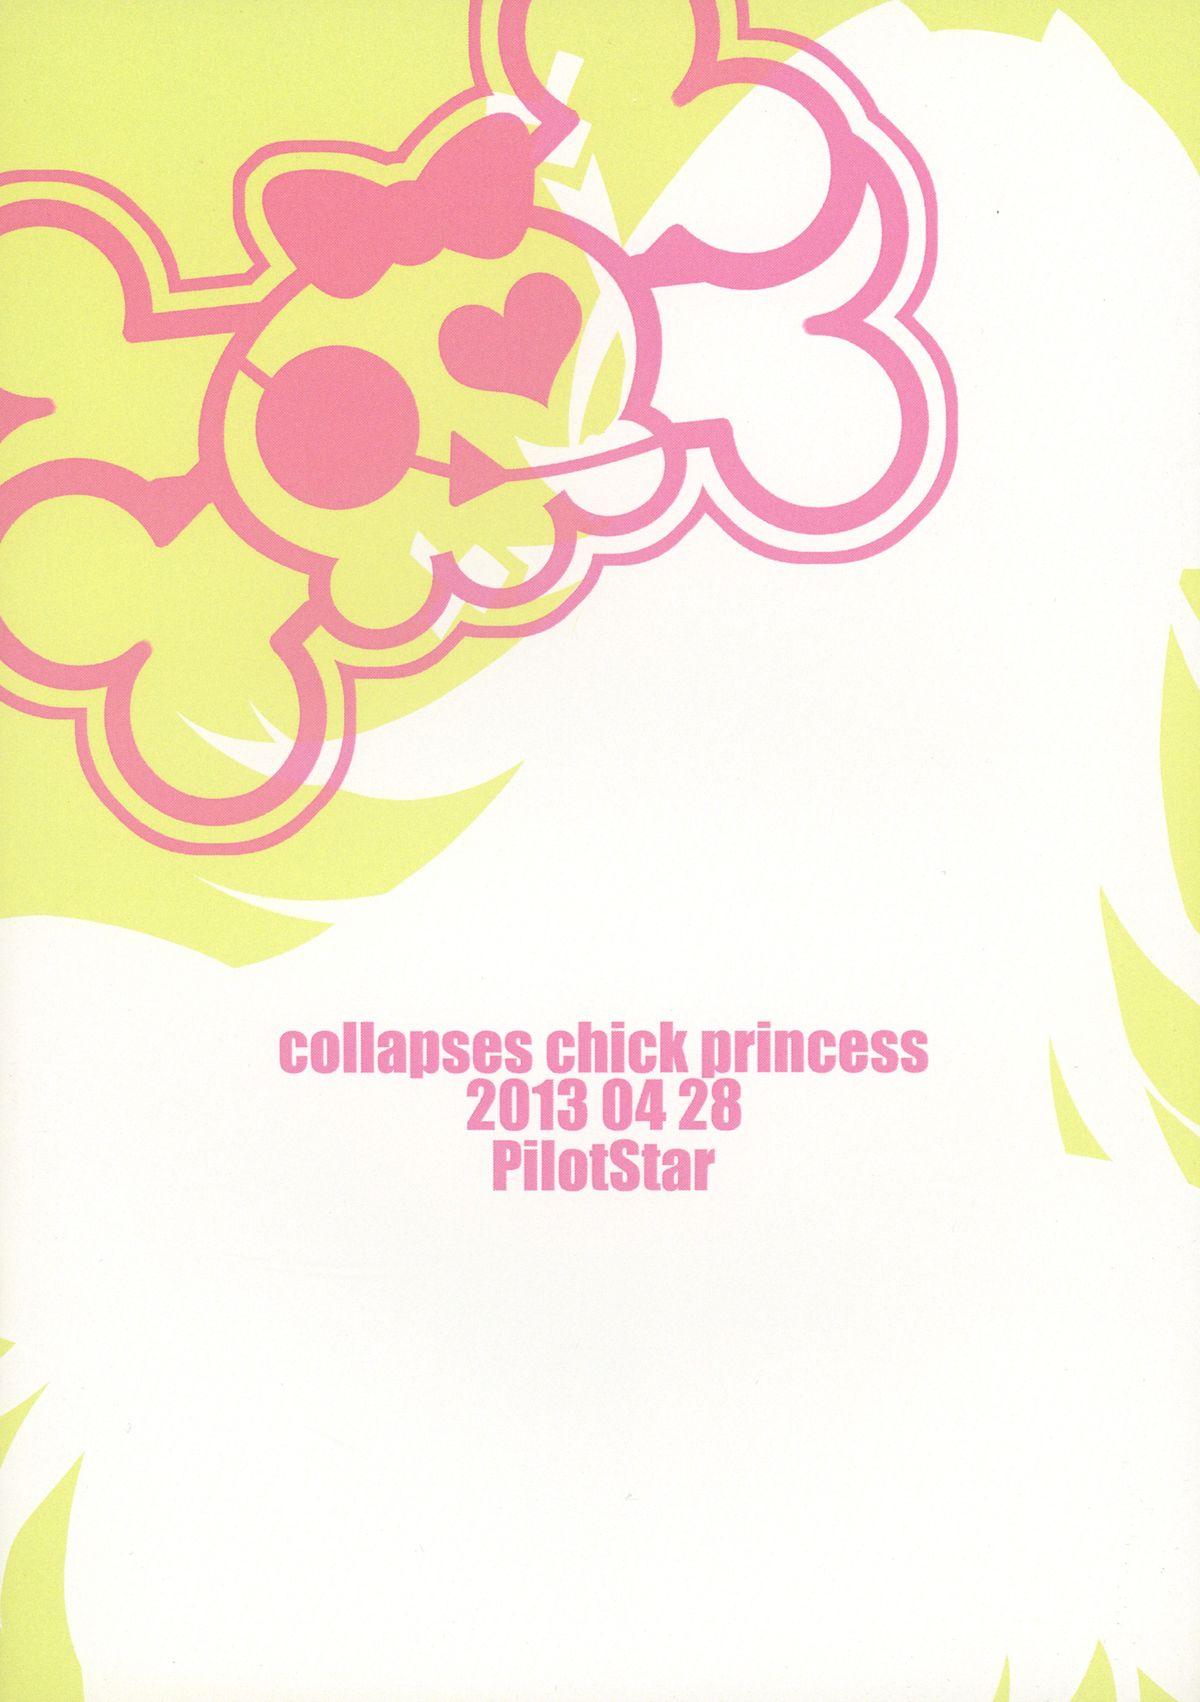 CC Princess - collapses chick princess 1